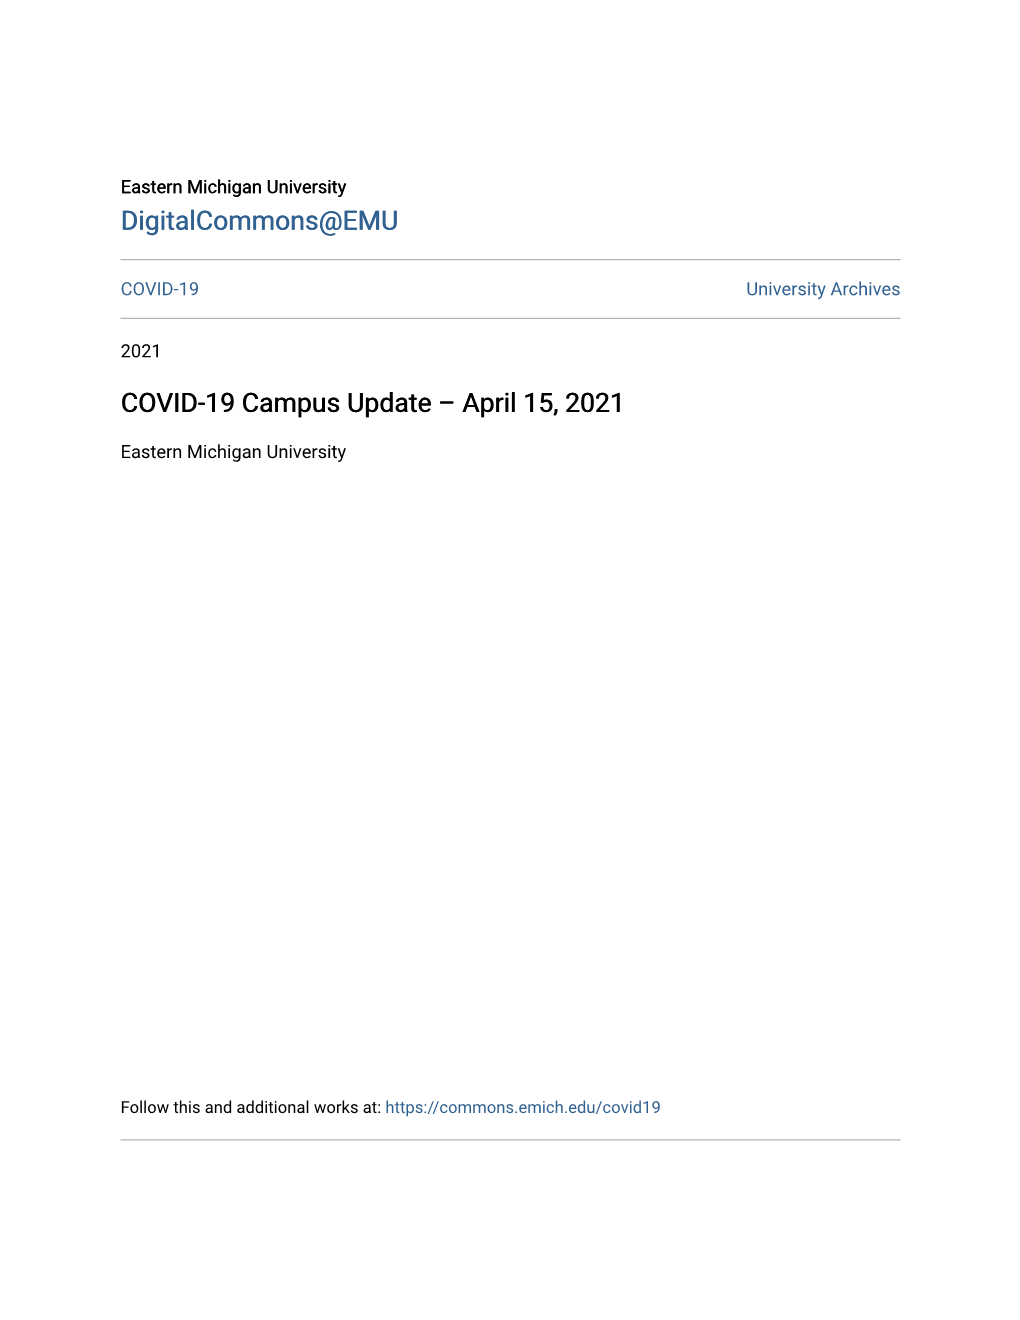 COVID-19 Campus Update – April 15, 2021